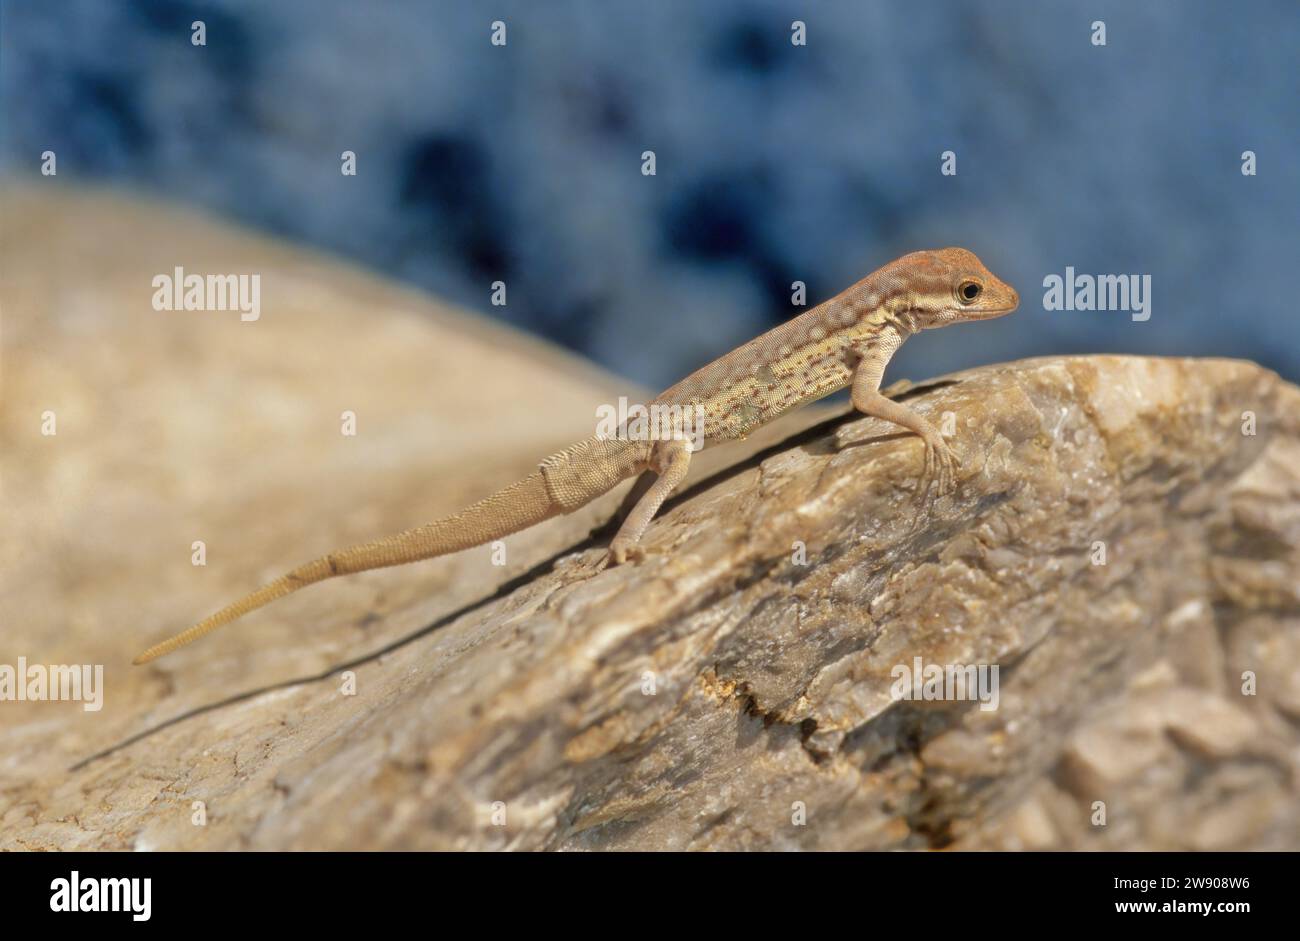 Pristurus samhaensis is a species of lizard in the Sphaerodactylidae family found on Samhah and Darsah islands. Stock Photo